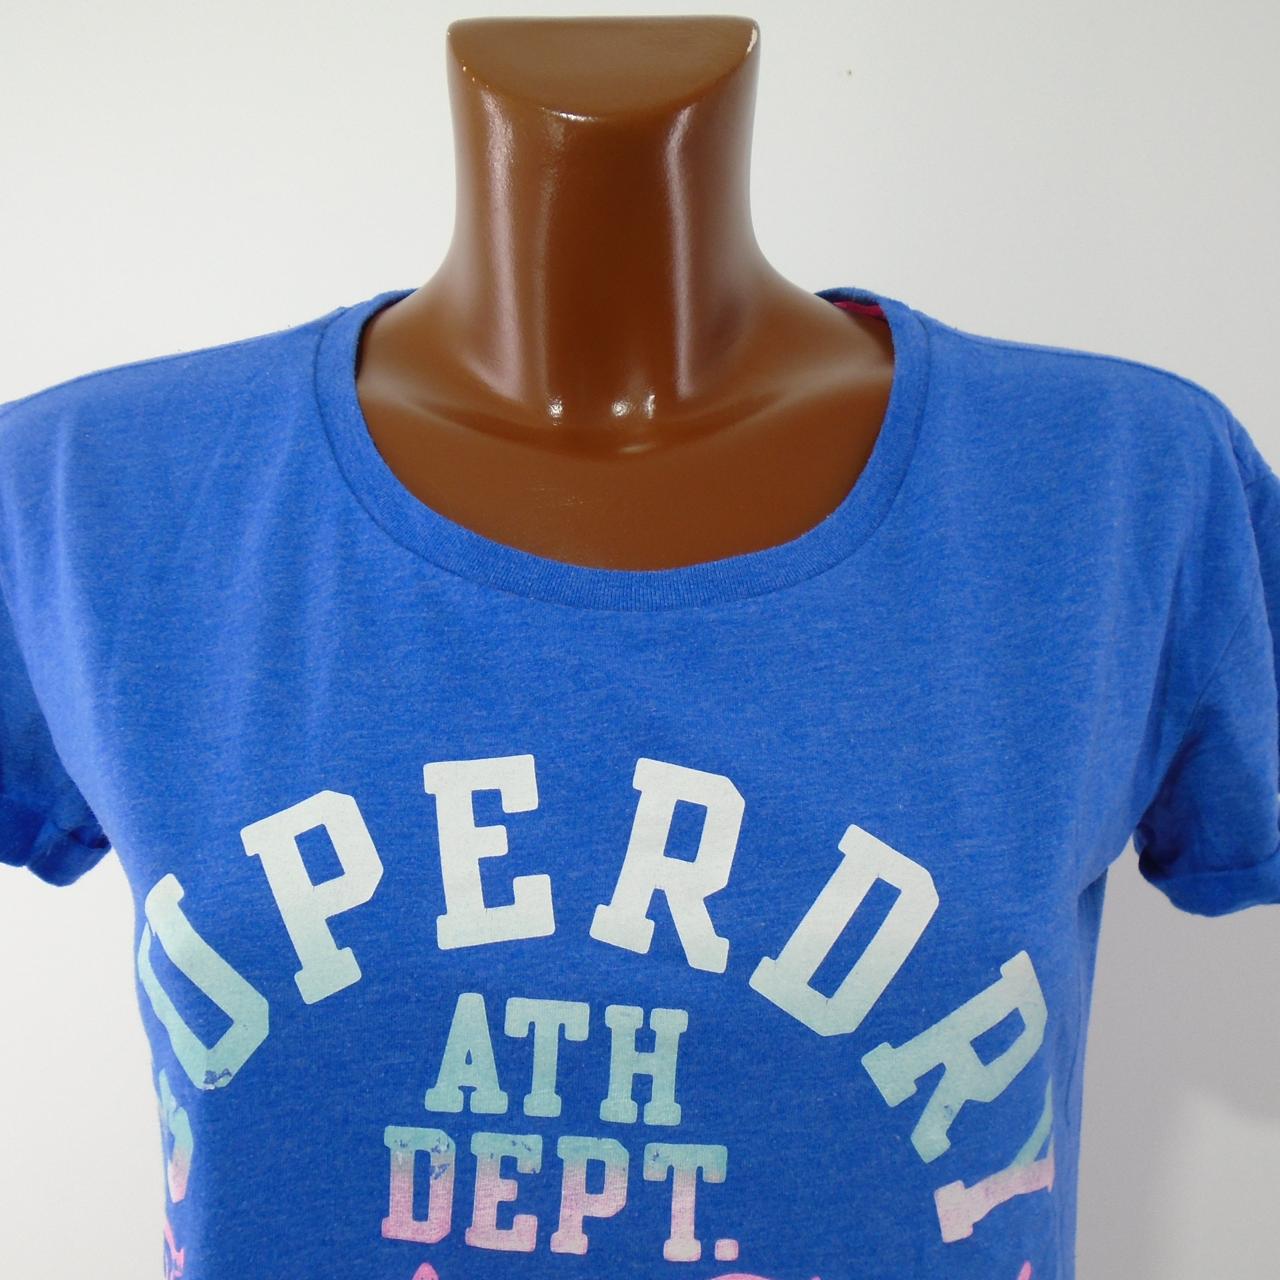 Camiseta Mujer Superdry. Azul. S. Usado. Bien